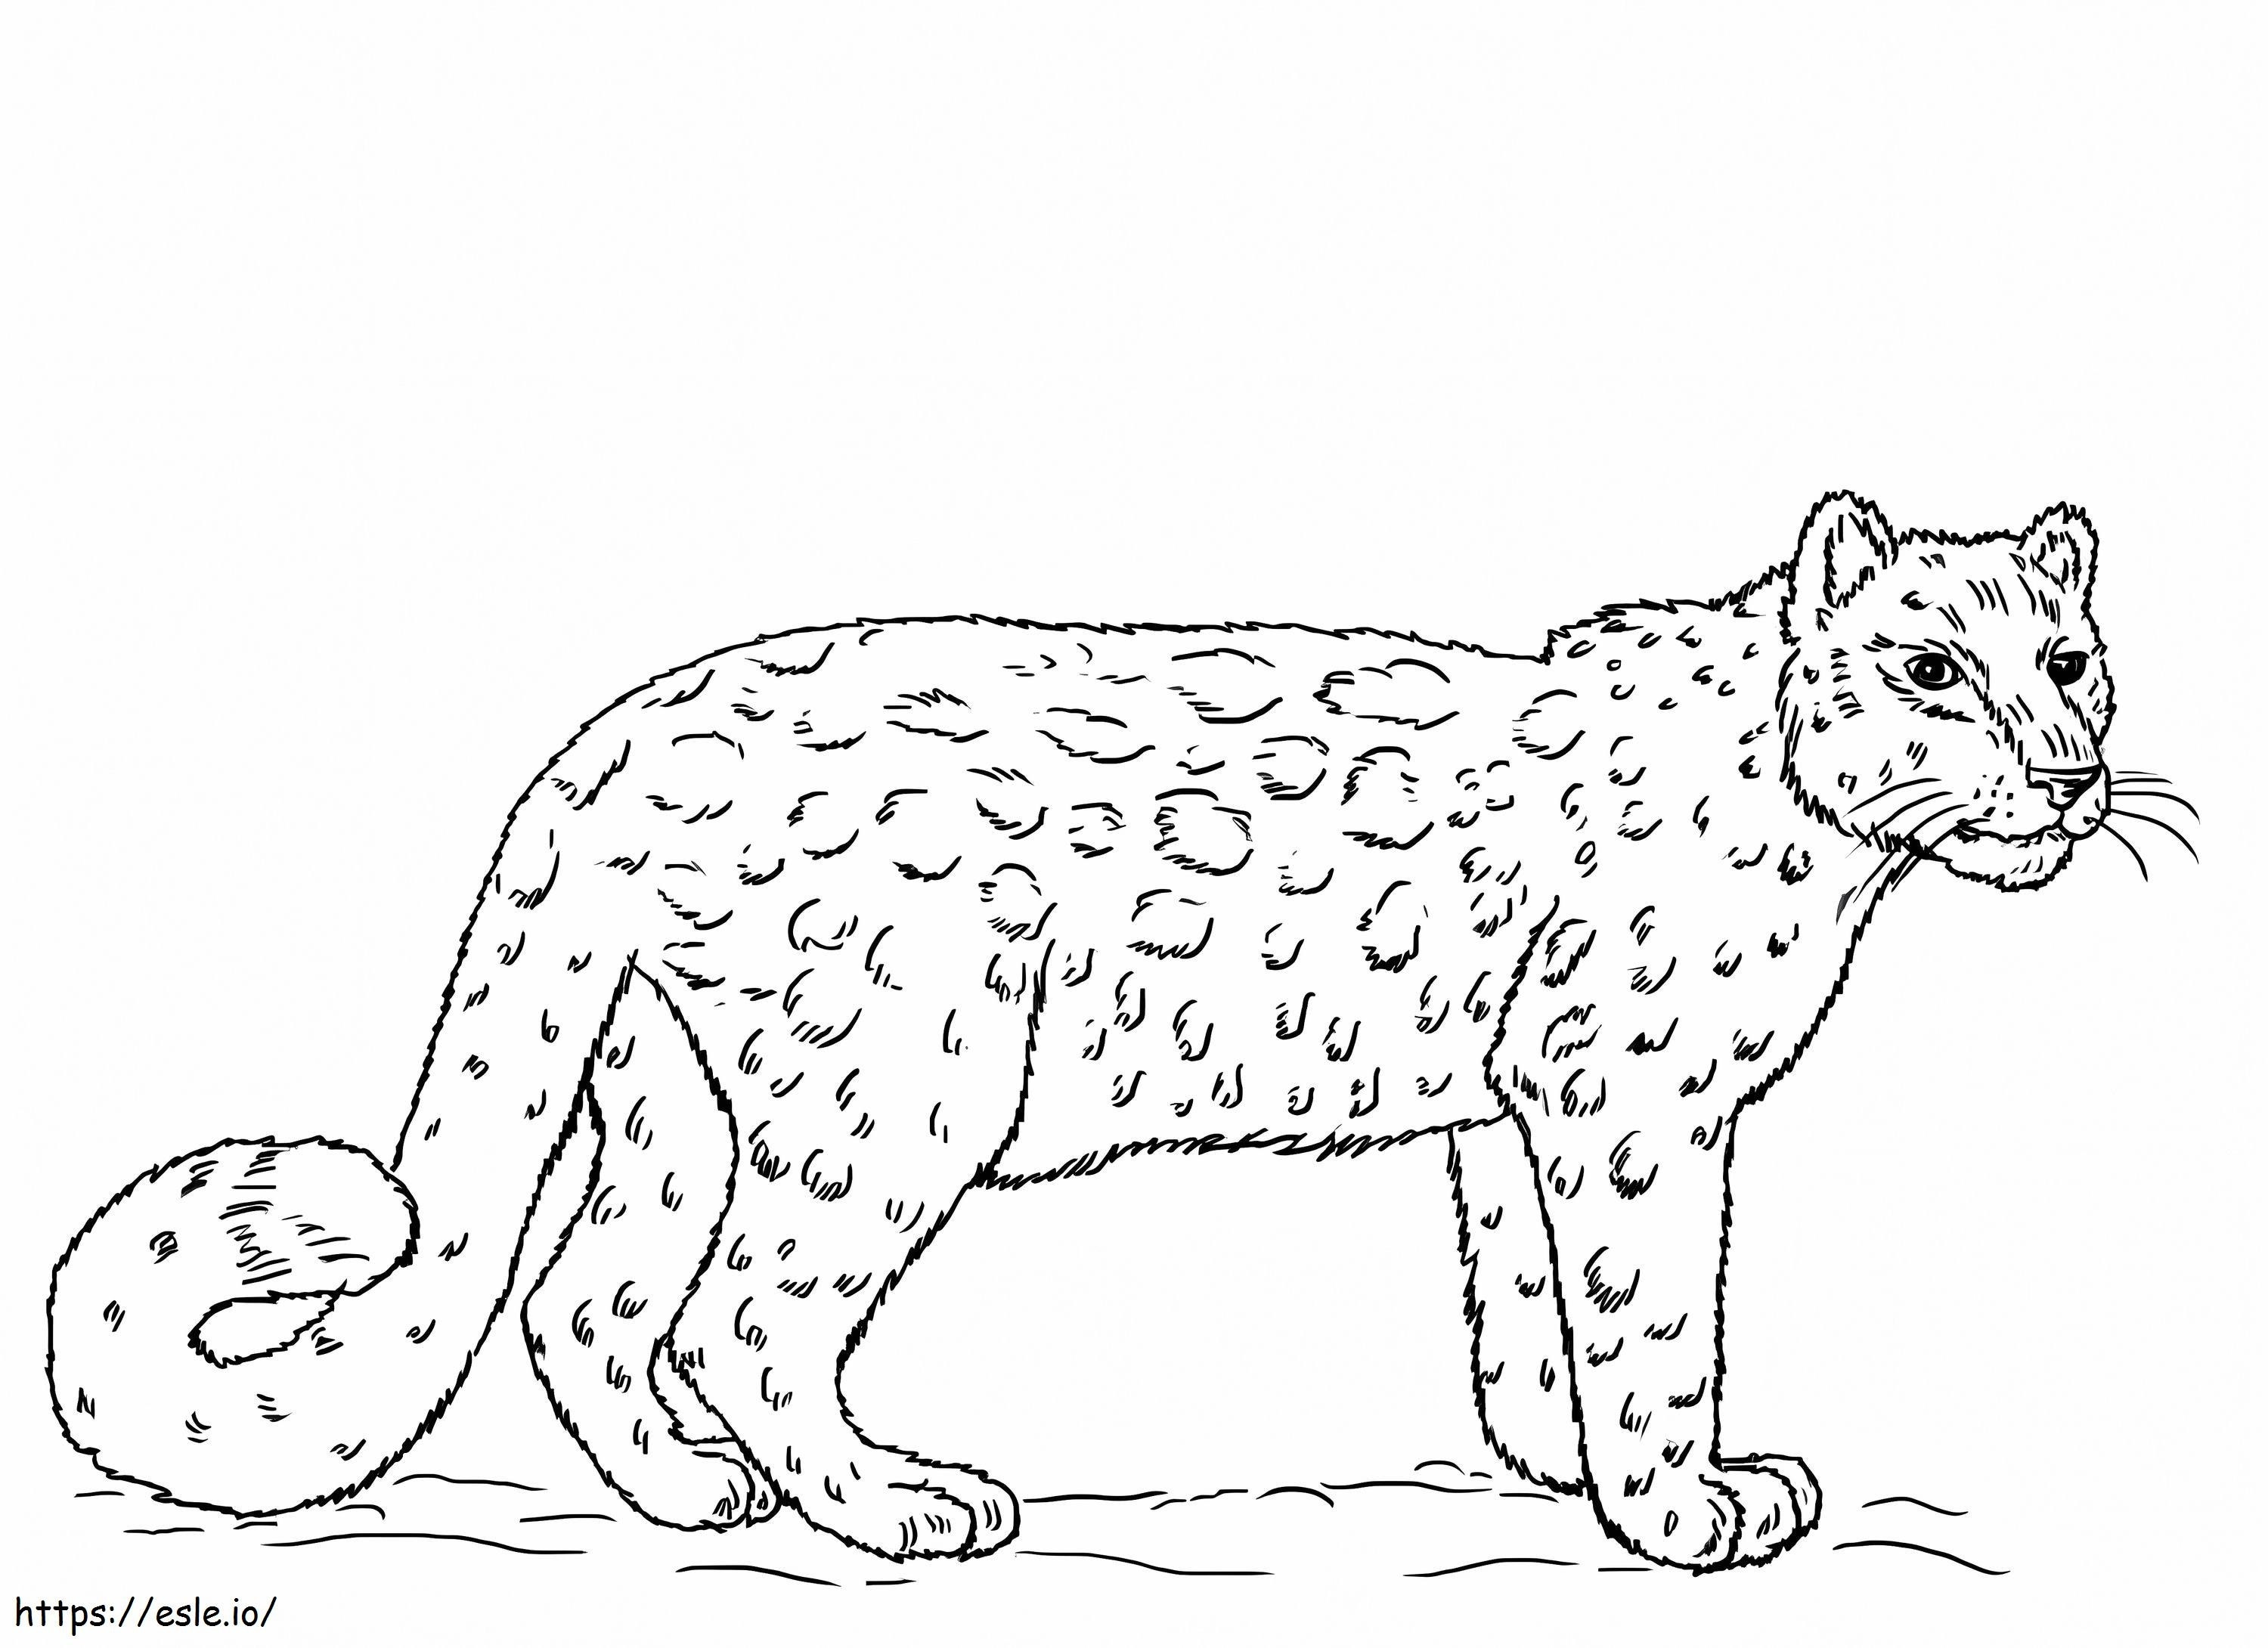 Leopardo da neve simples para colorir